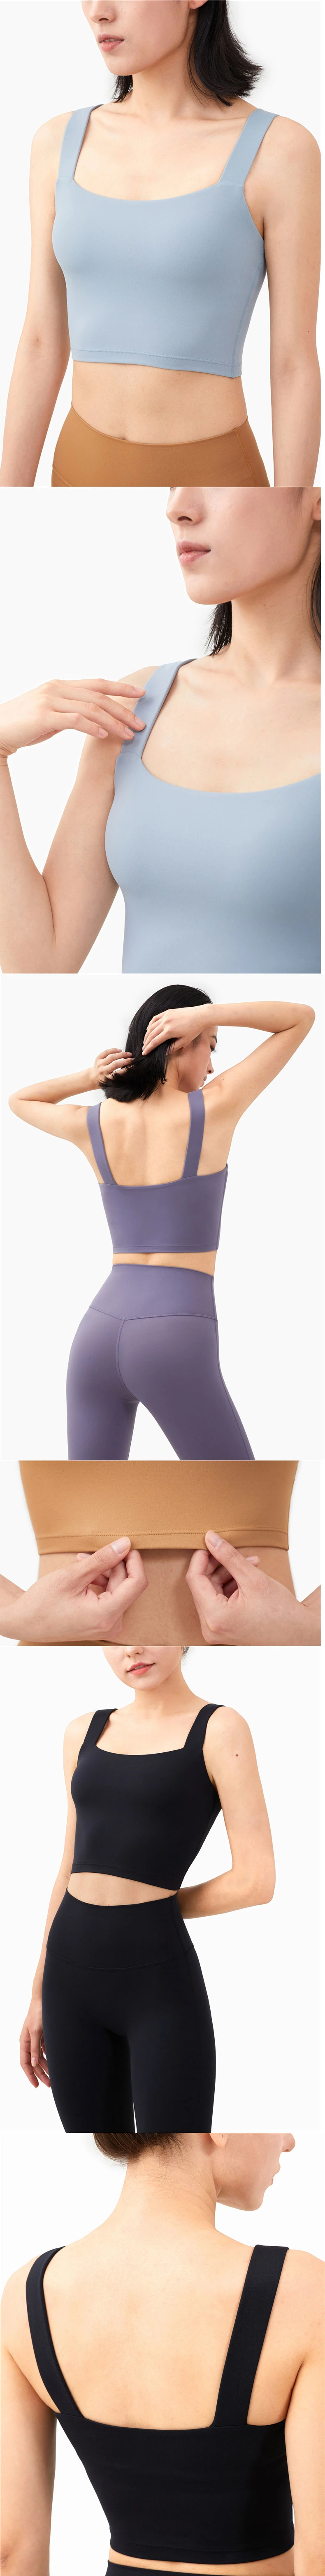 New Autumn and Winter Sports Bra, Cross Back Shockproof Classic Yoga Sports Fitness Underwear